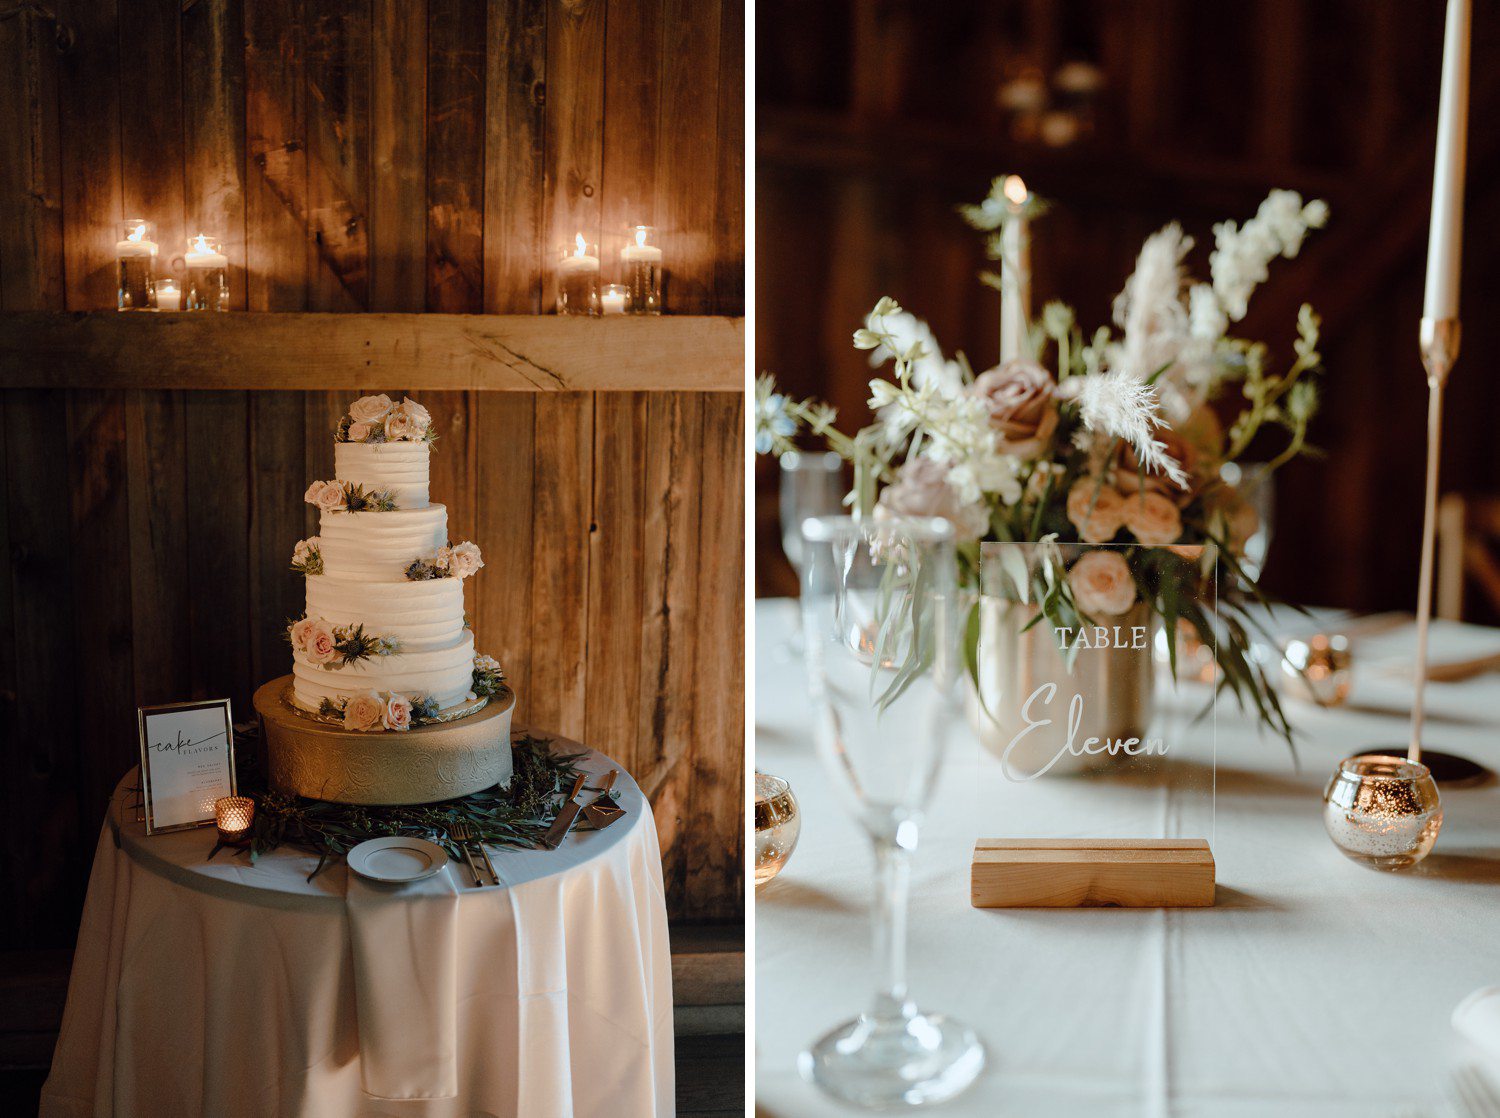 Wedding Cake and Table decor